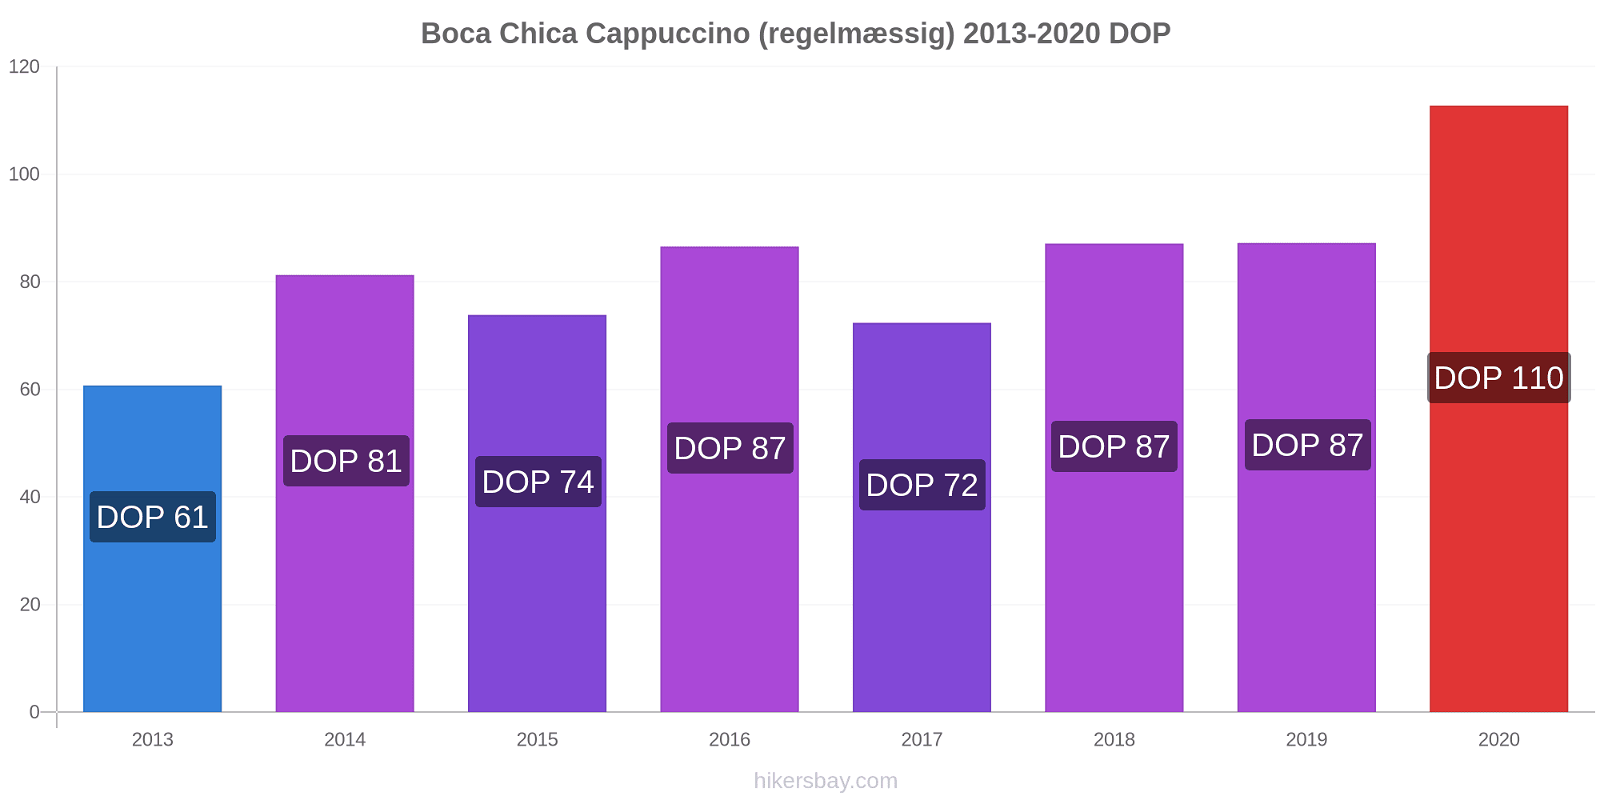 Boca Chica prisændringer Cappuccino (regelmæssig) hikersbay.com